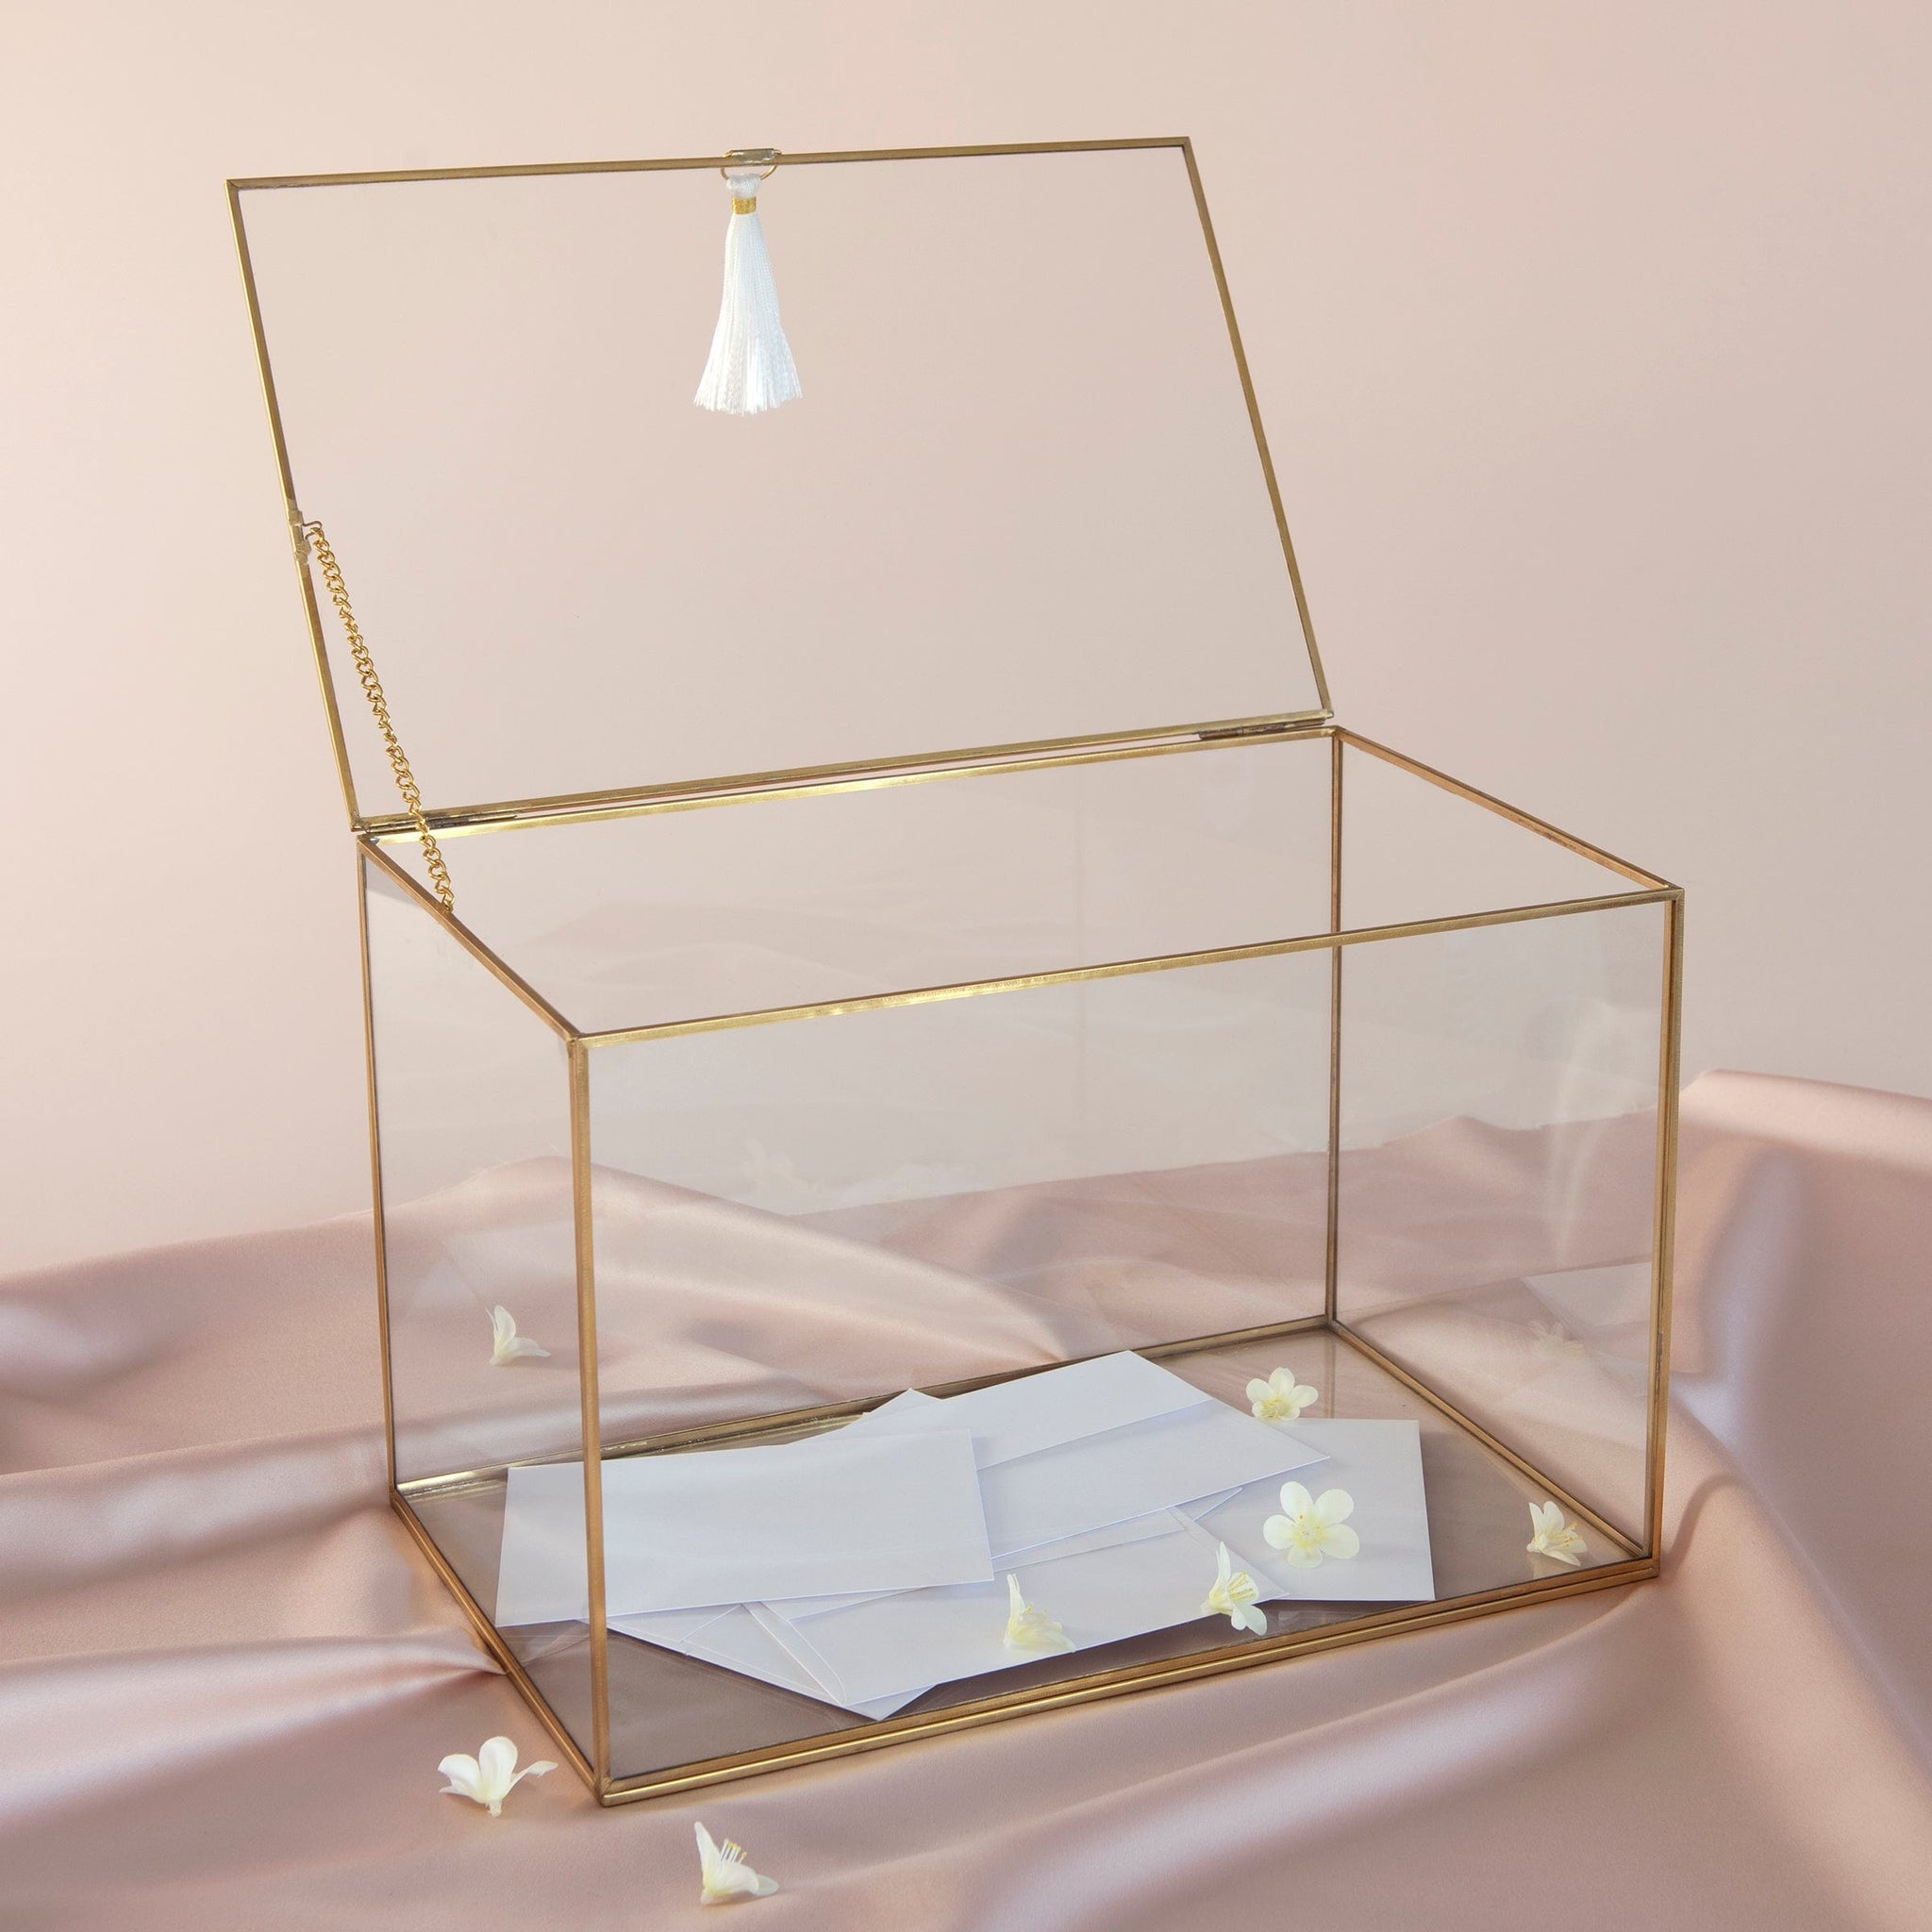 New transparent plastic wedding gift acrylic bridesmaid gift box